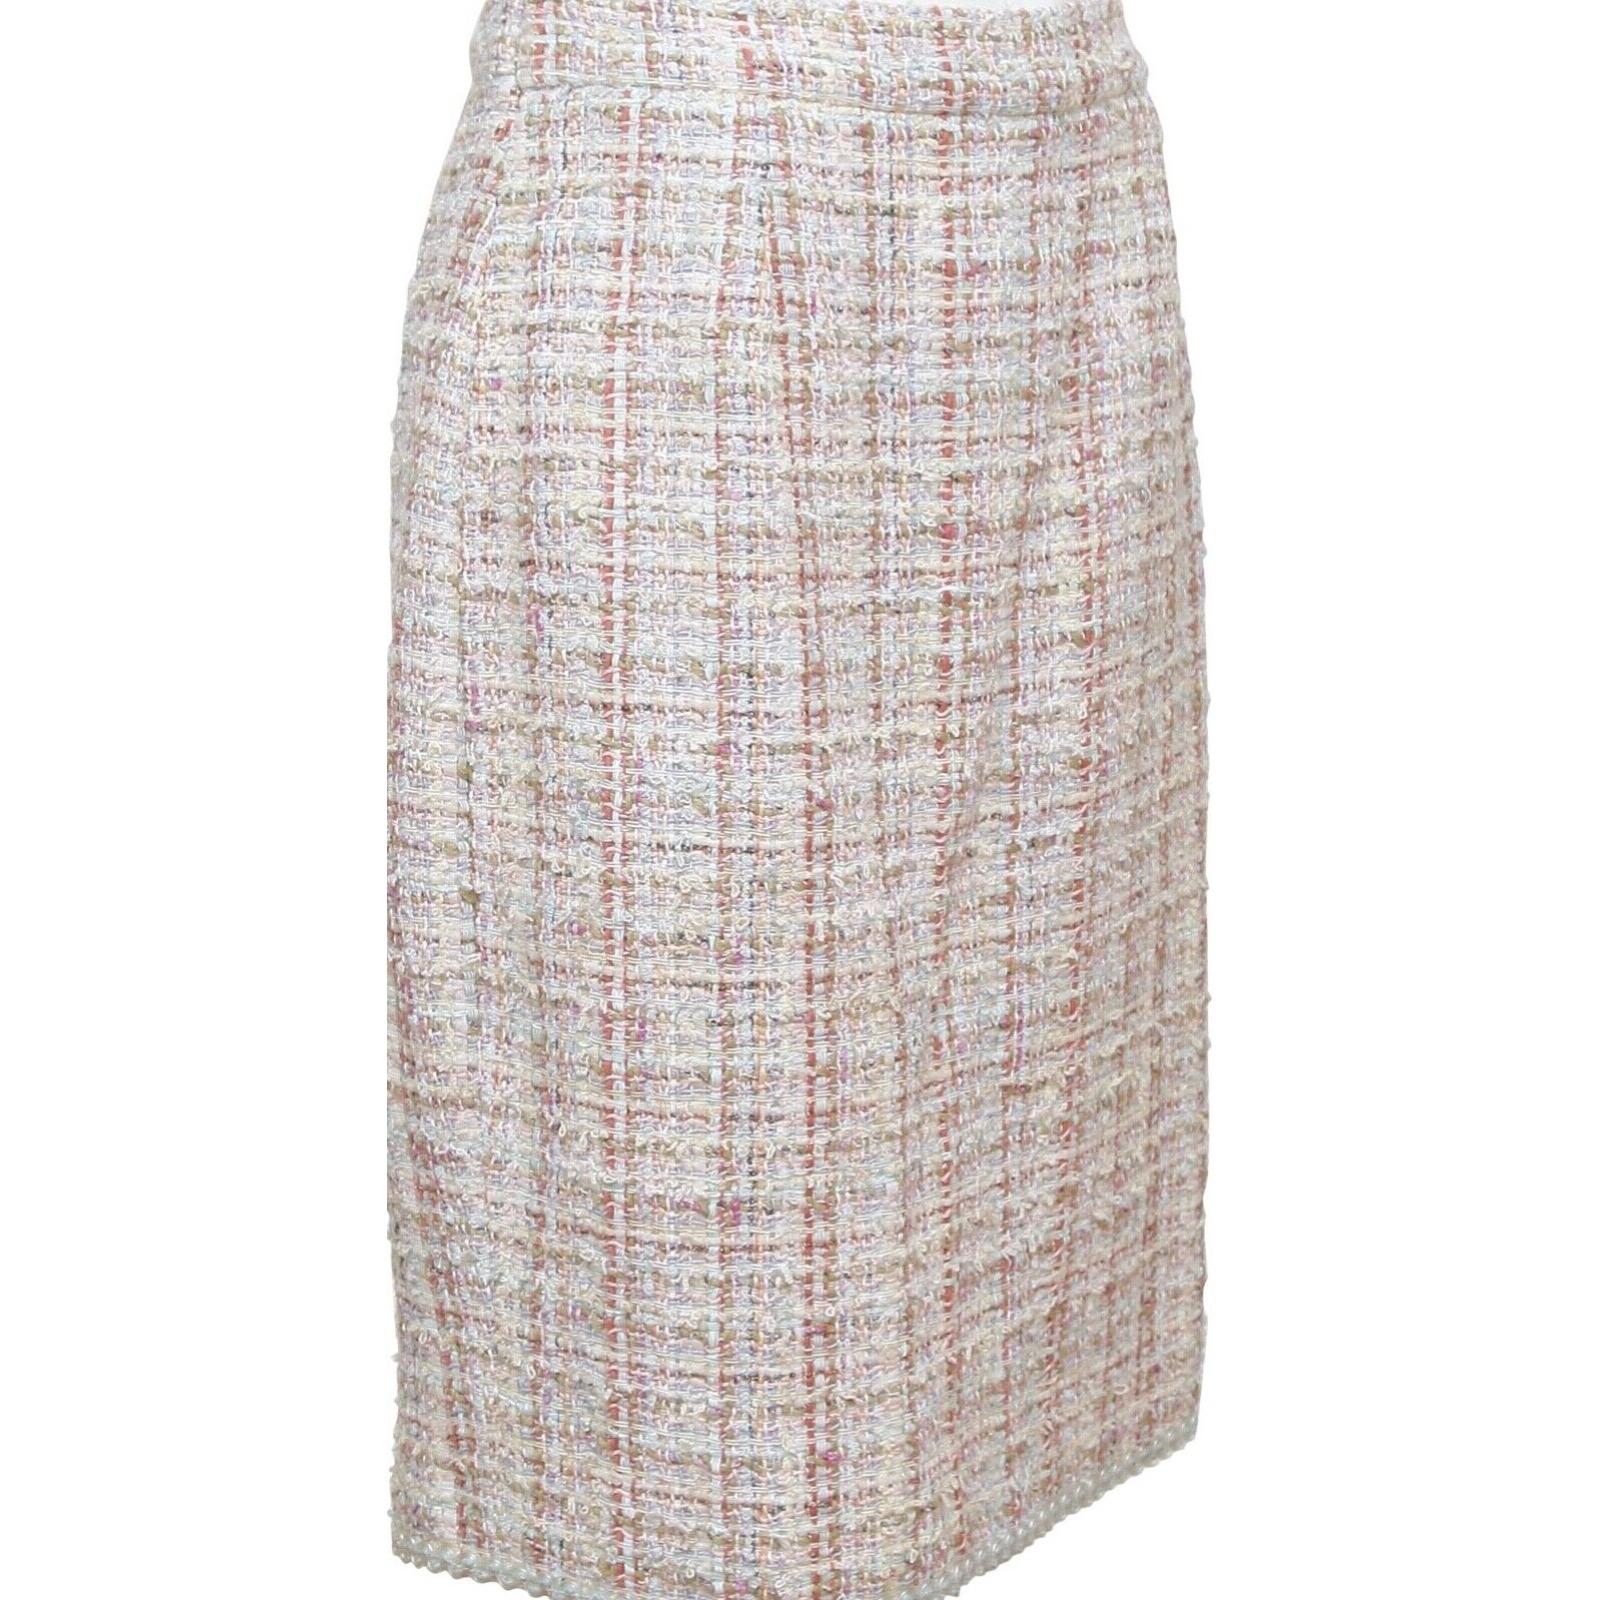 Gray CHANEL Tweed Skirt Fantasy Multi-Color Camellia Cotton 2013 RUNWAY SZ 40 For Sale